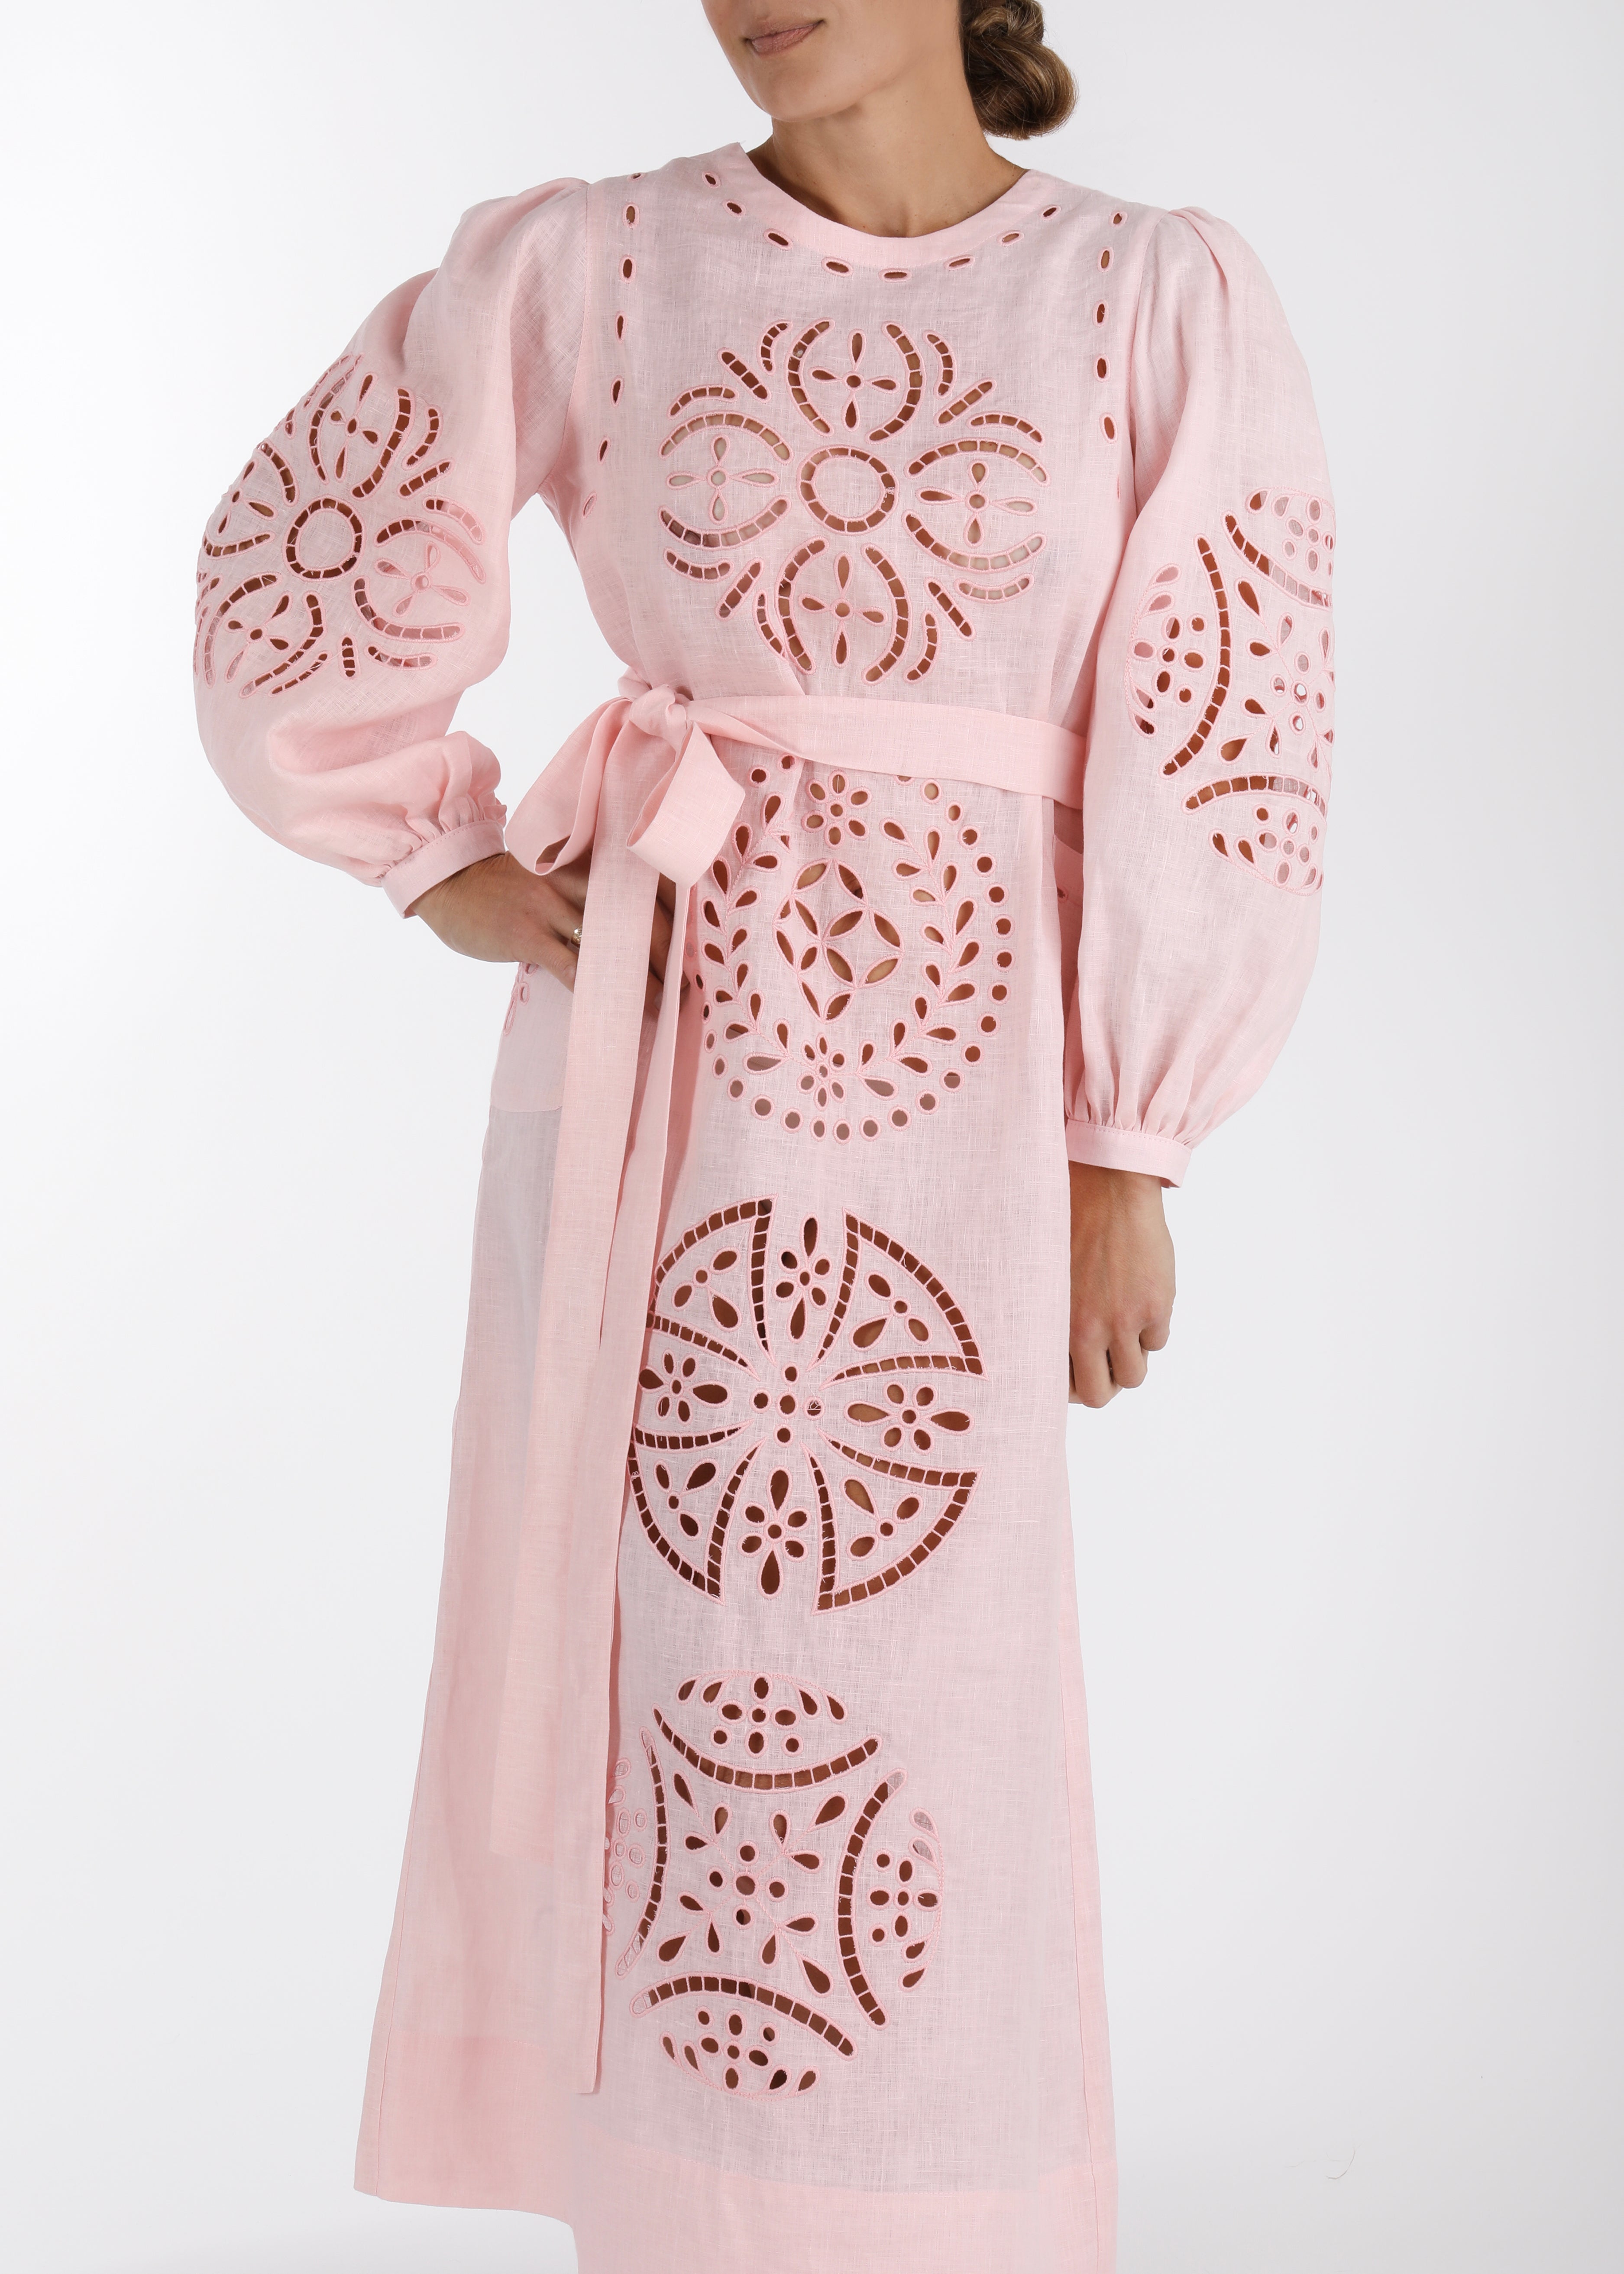 Richelieu Ukrainian Dress - Blush Pink by Larkin Lane